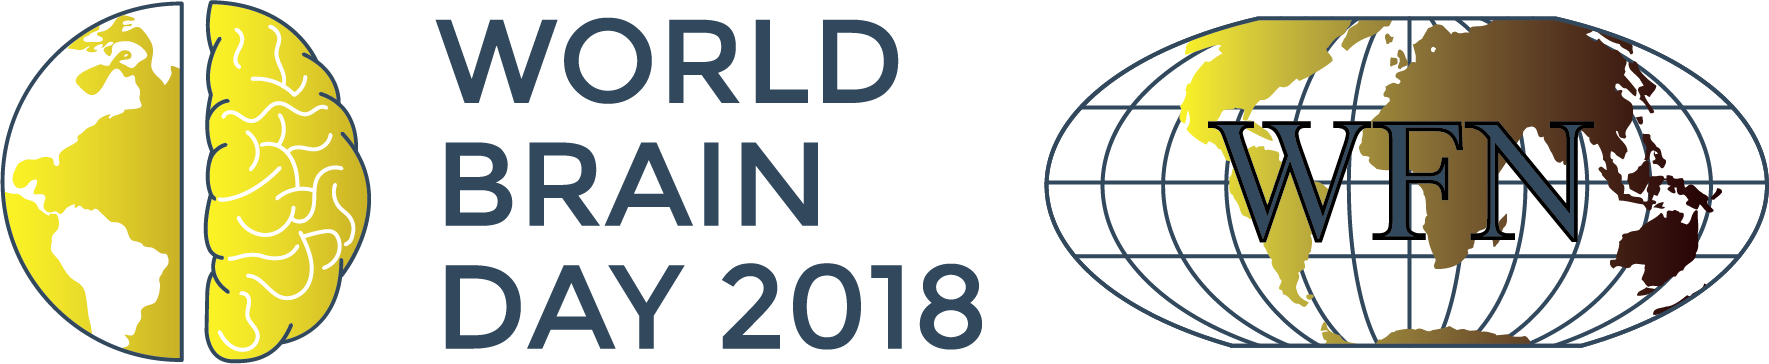 Всемирная Федерация невролов. World Brain Day. World Brain Day logo. Всемирная Федерация инженерных организаций.